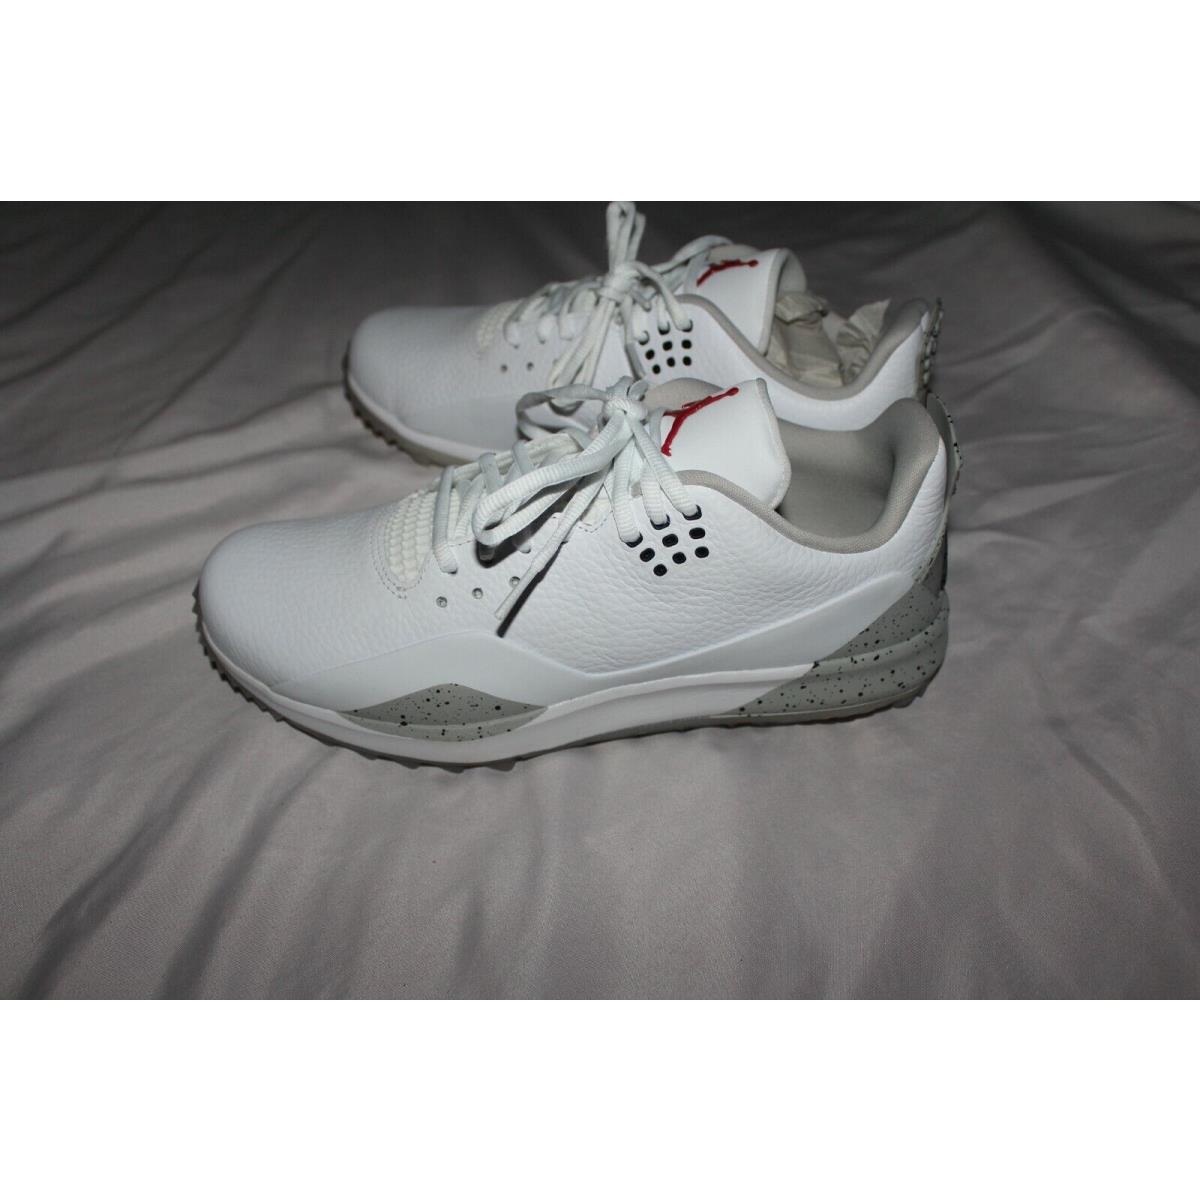 Nike Air Jordan Adg 3 Cement Grey White Black CW7242-100 sz 8 Golf Shoes No Lid